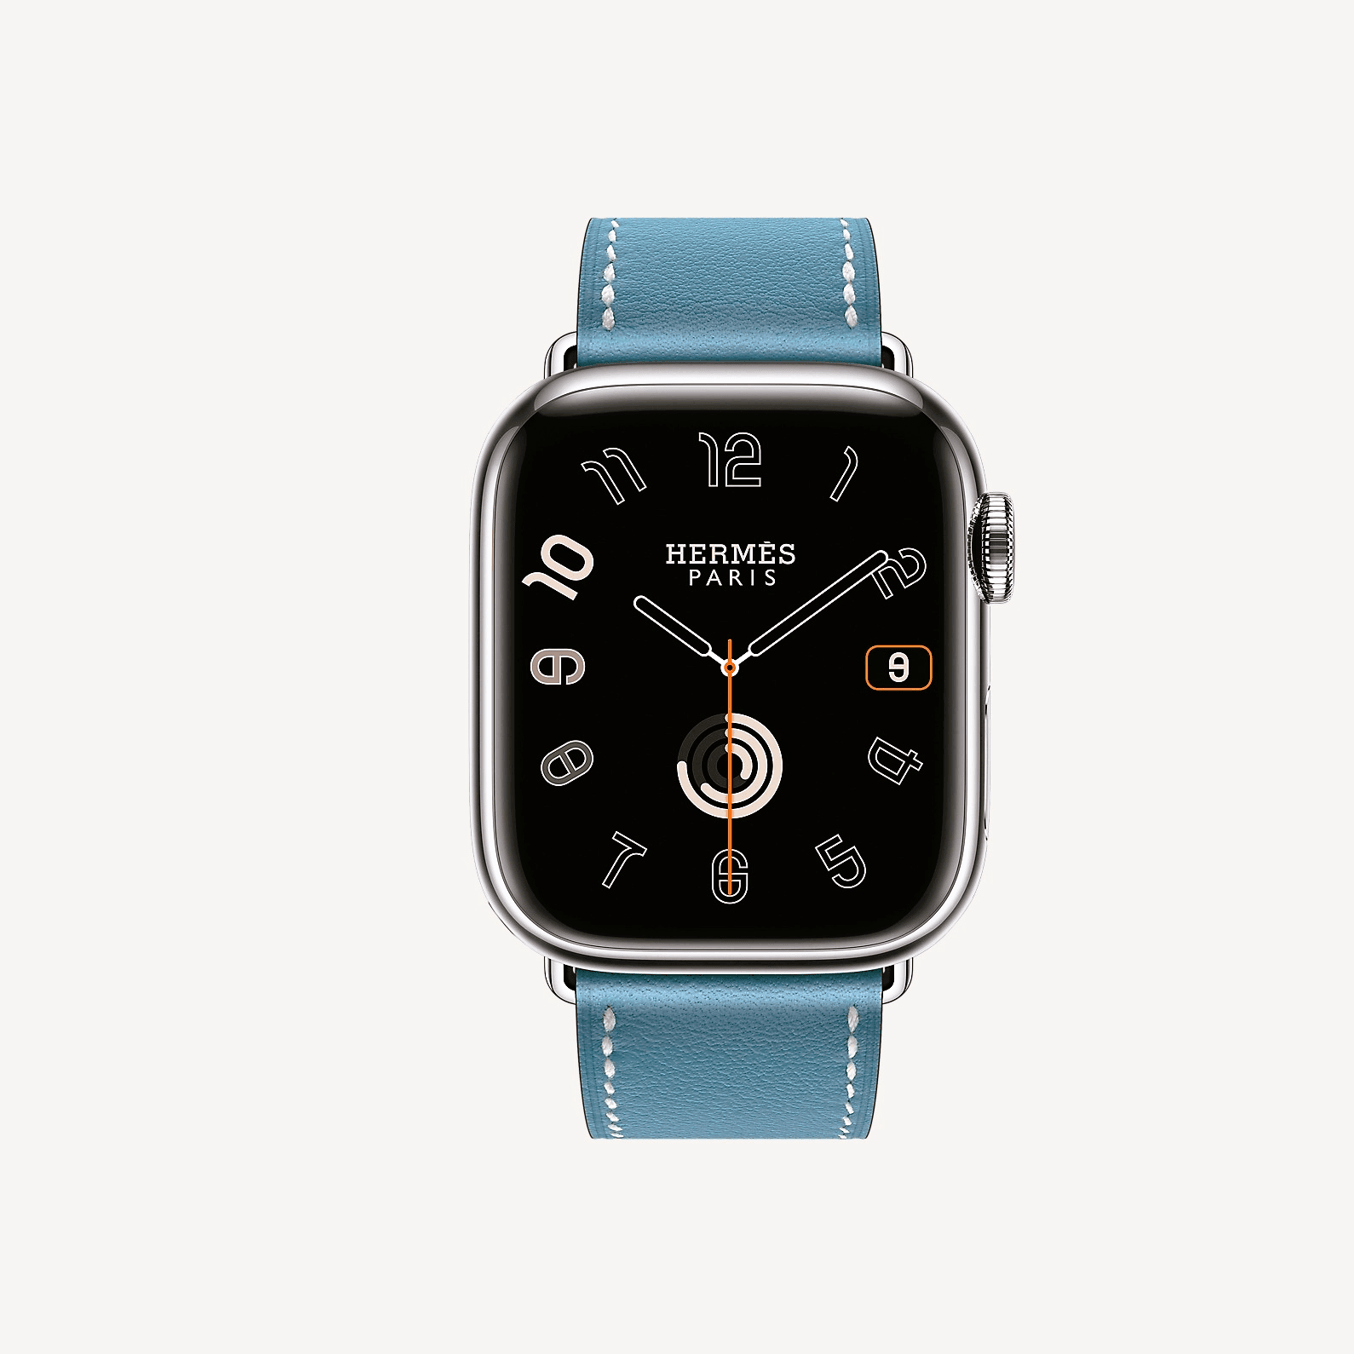 Luxury Smartwatches - Apple Watch Hermes